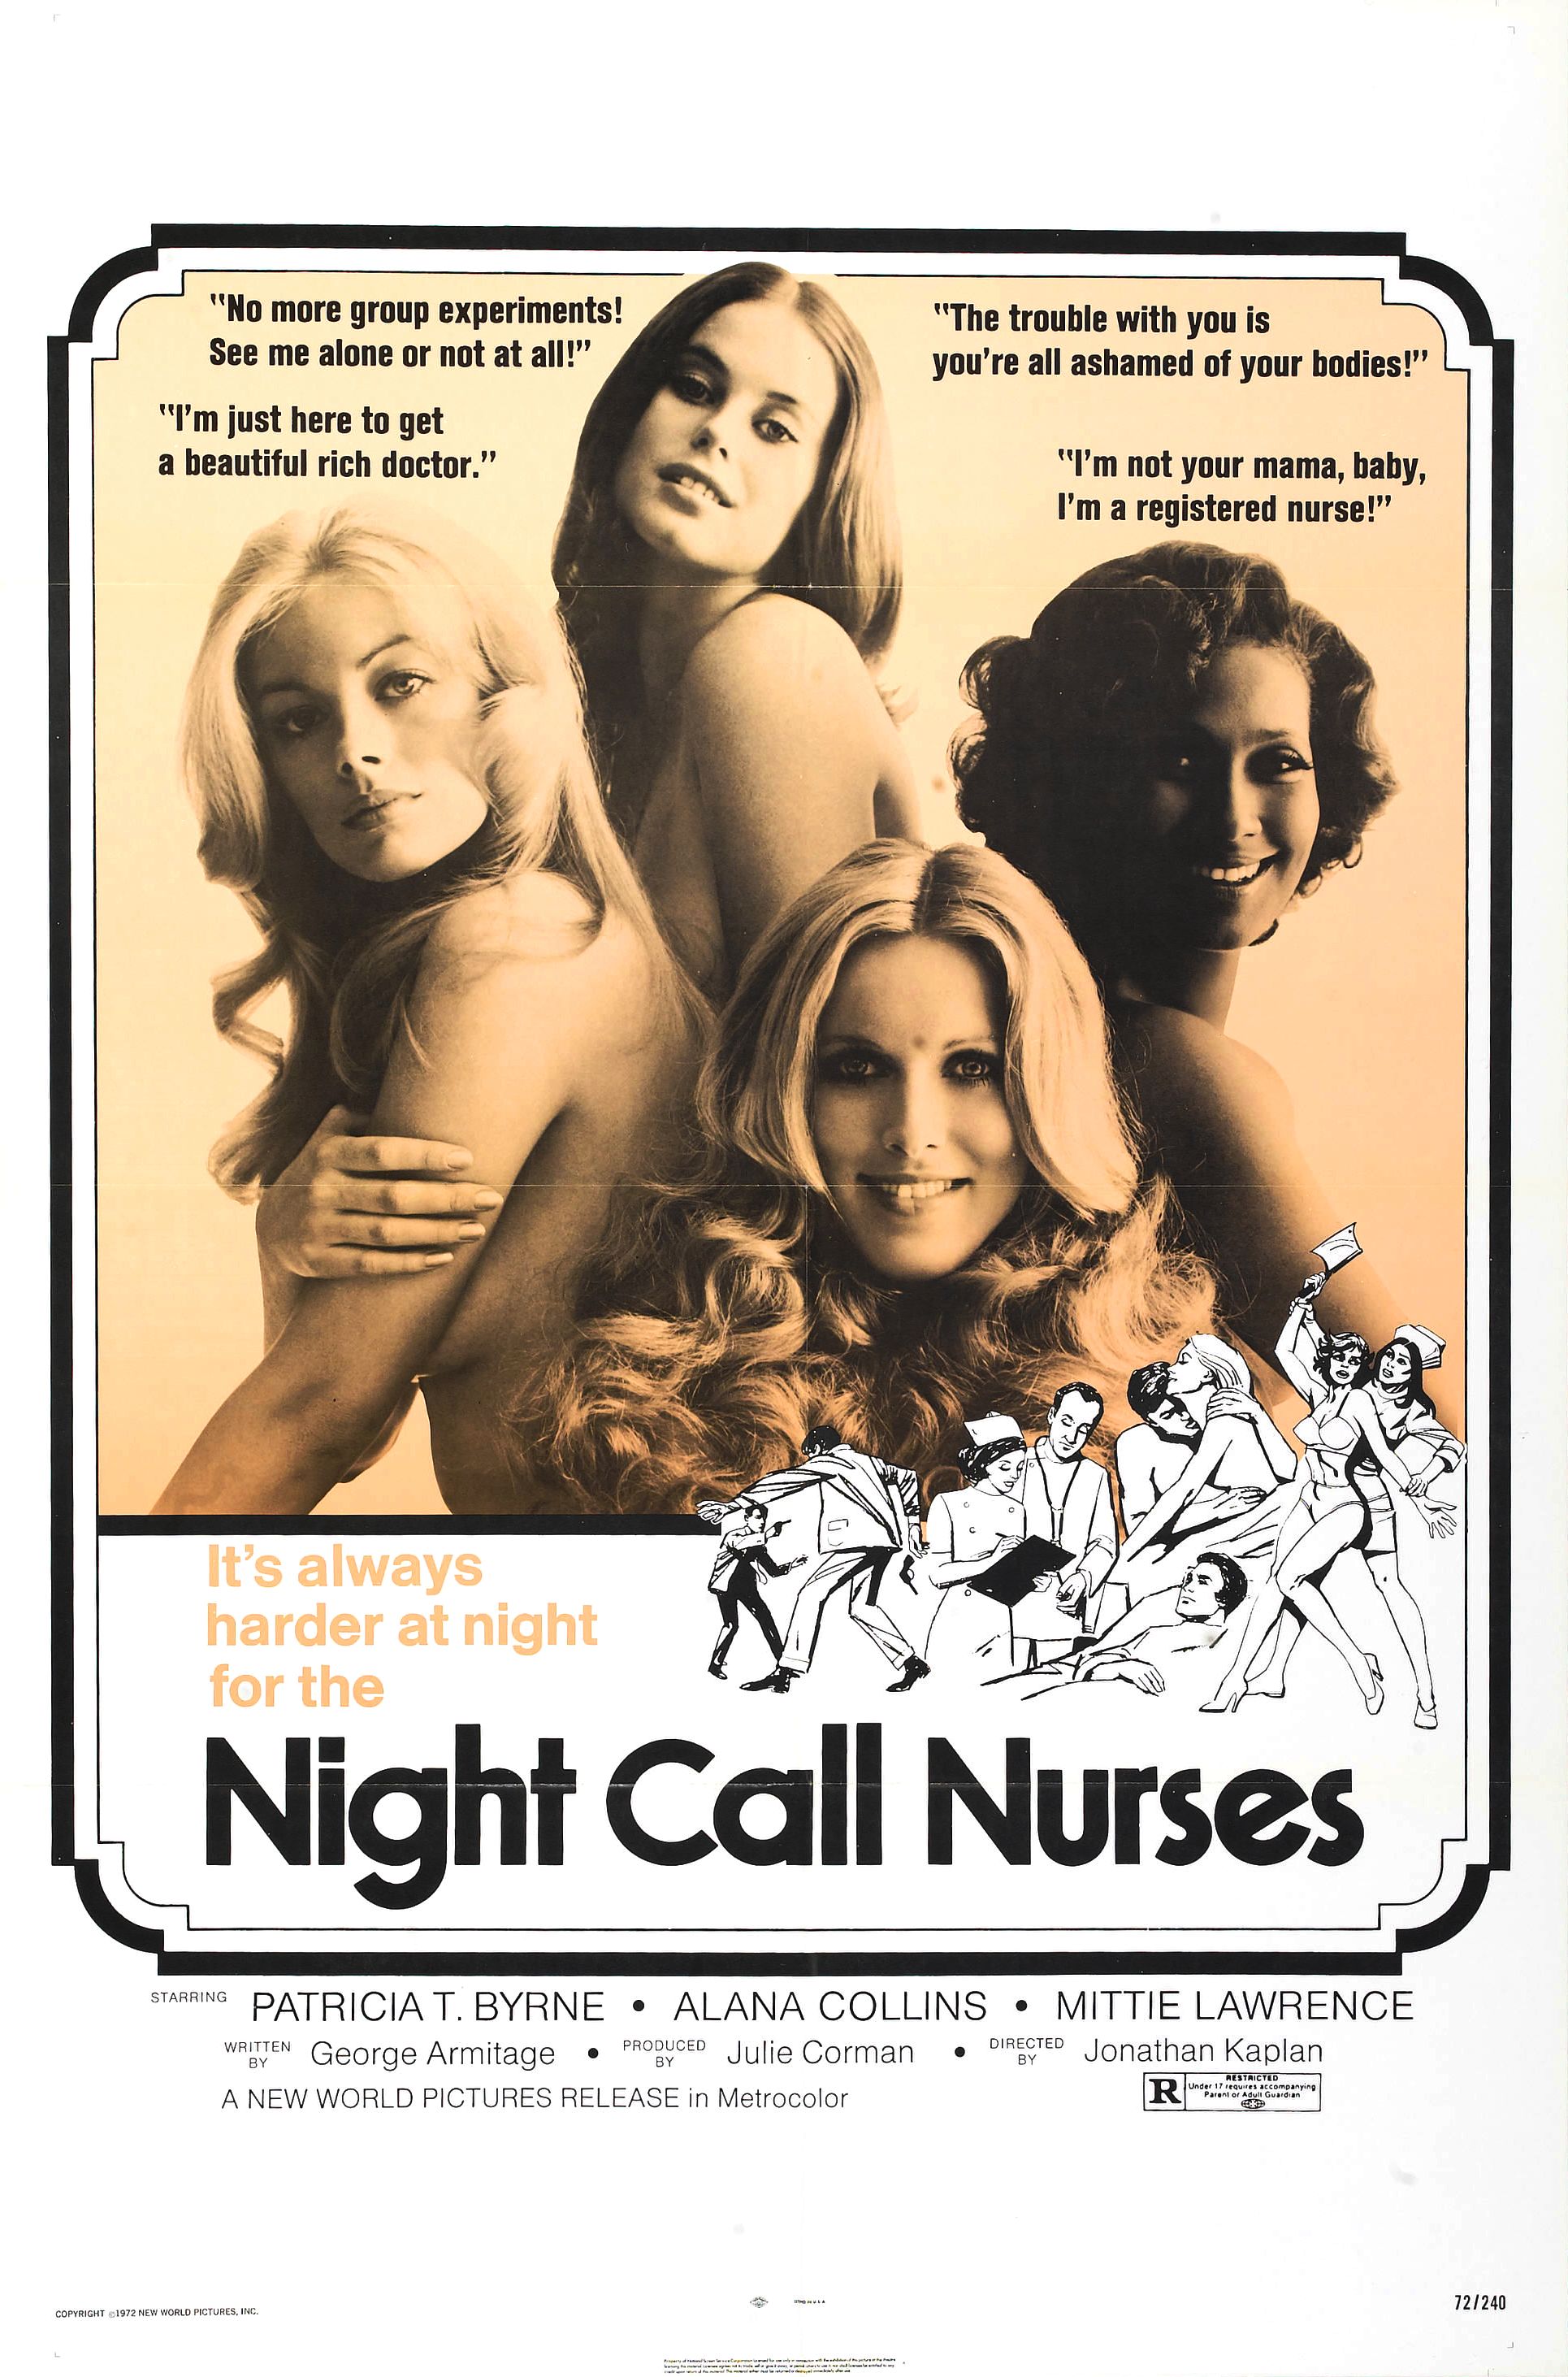 Night call nurses poster.jpg